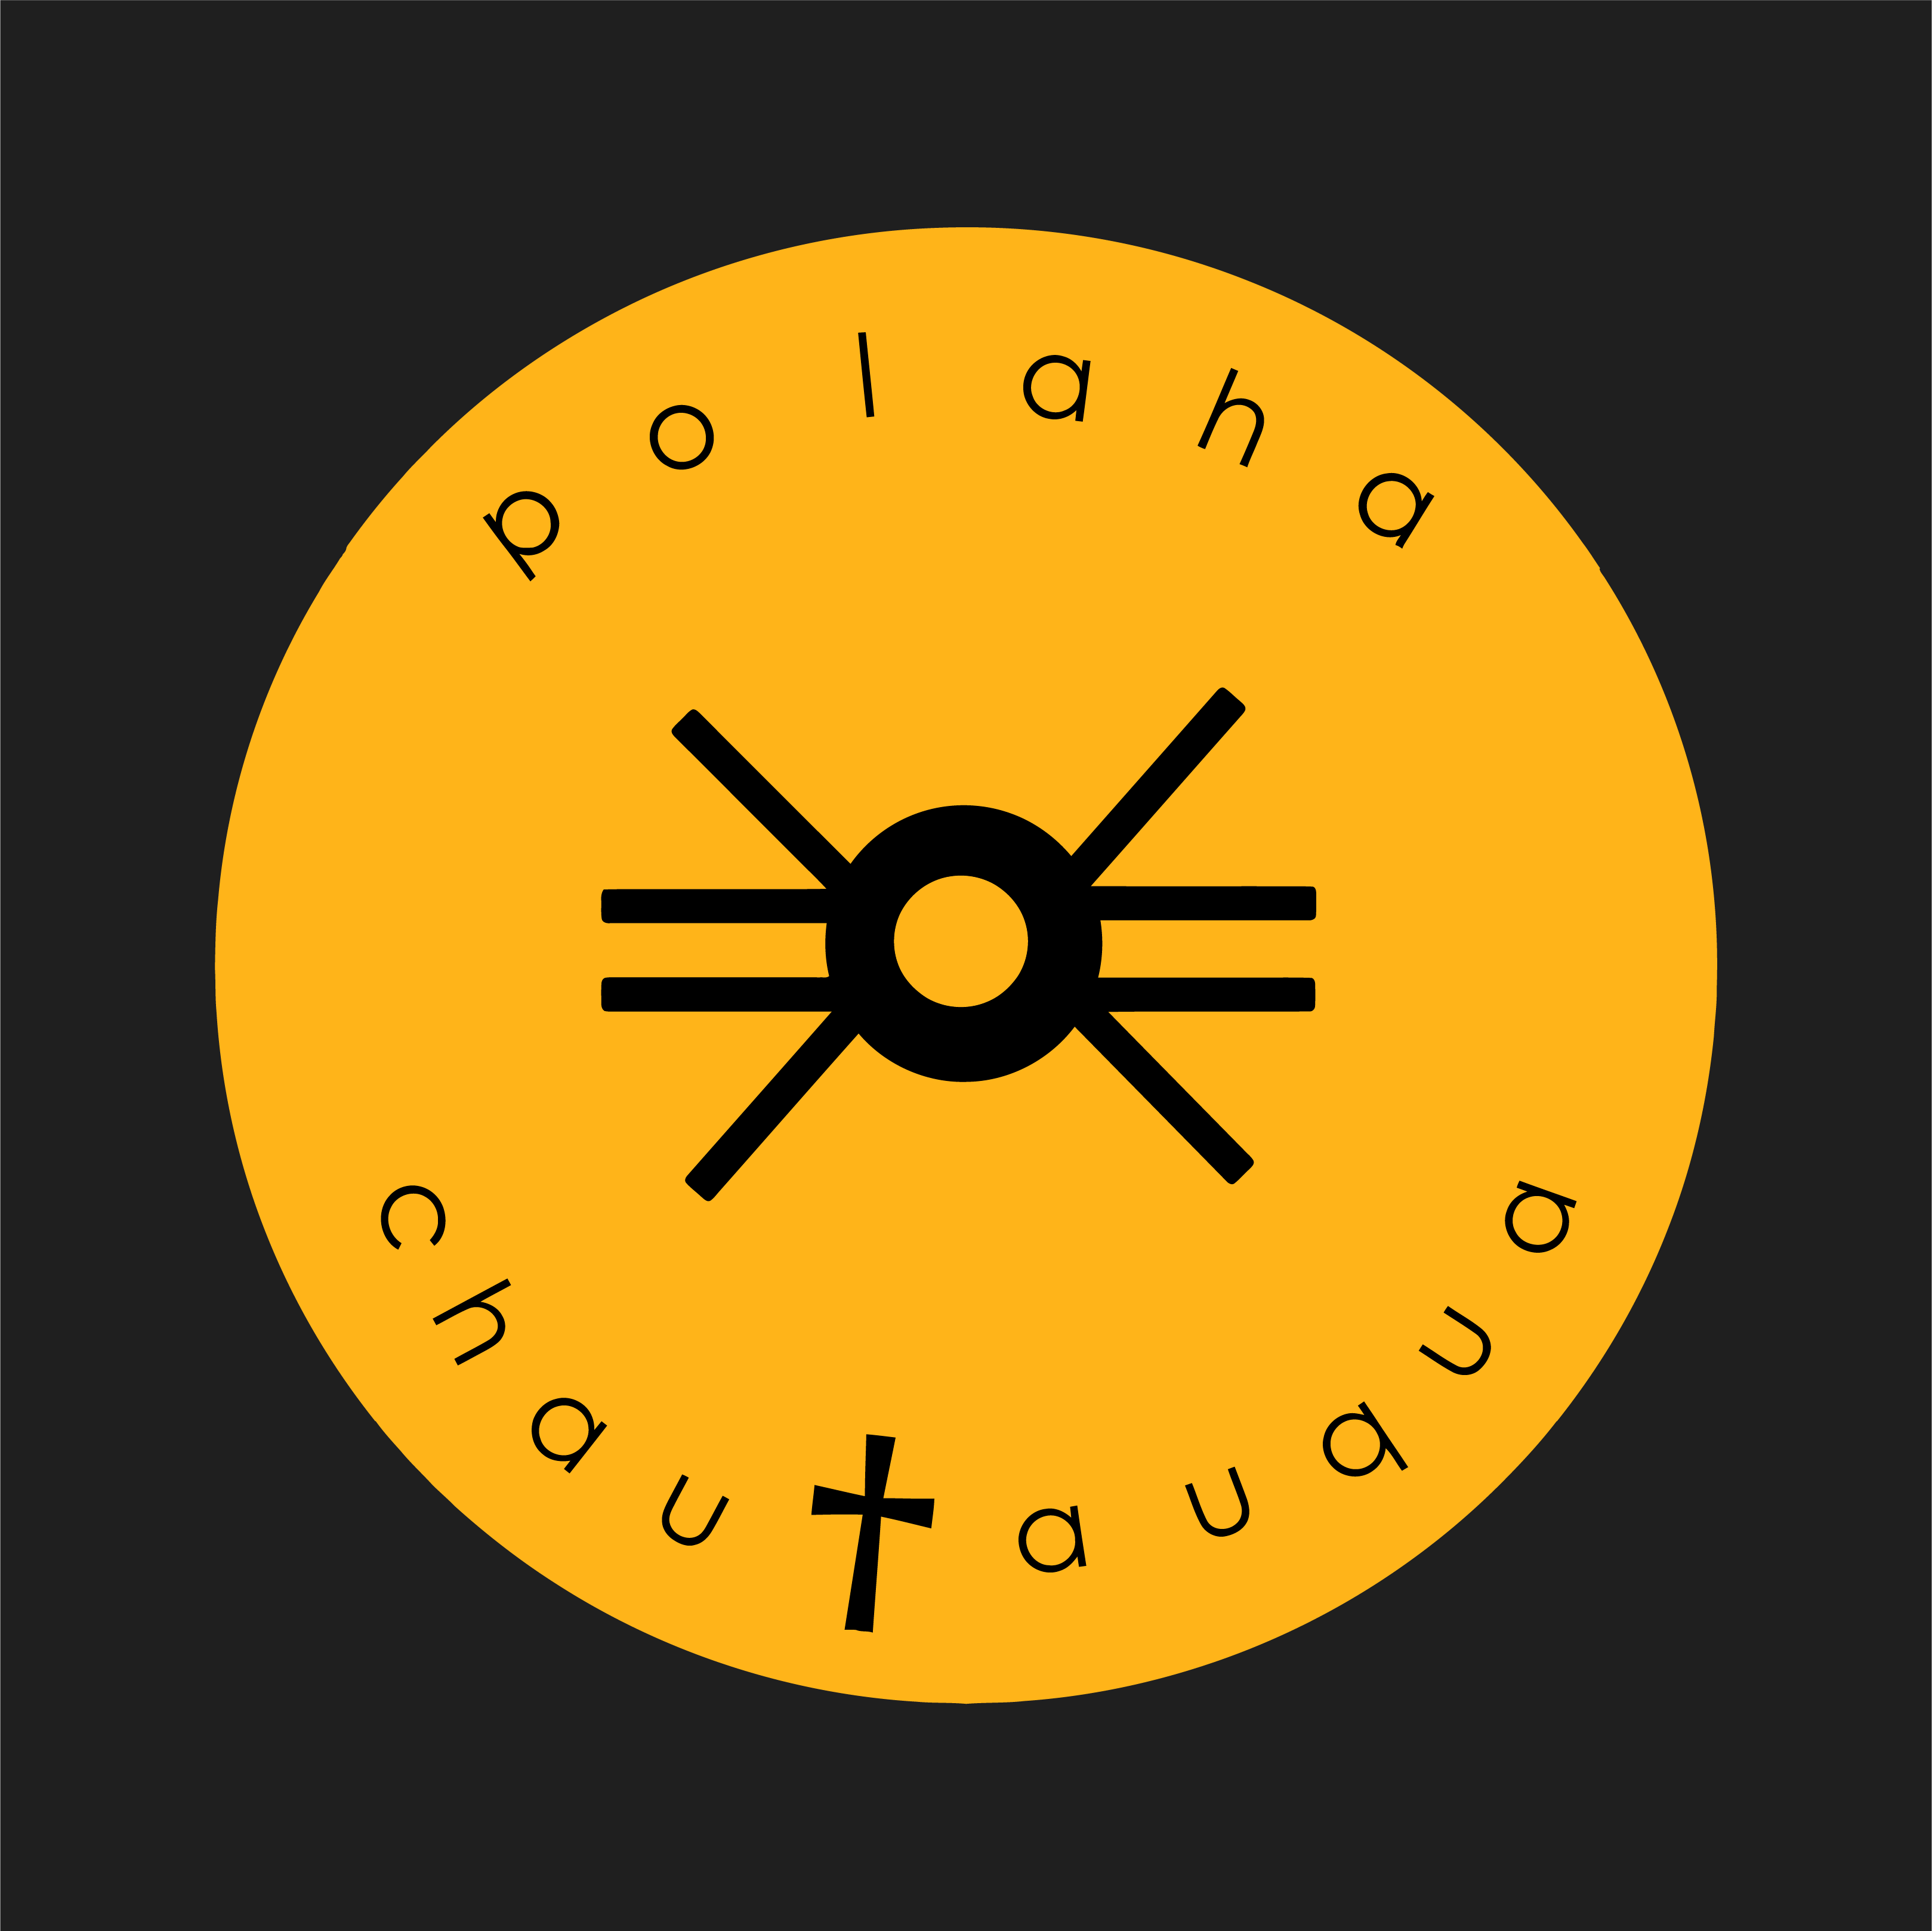 The Polaha Chautauqua shirt design - zoomed